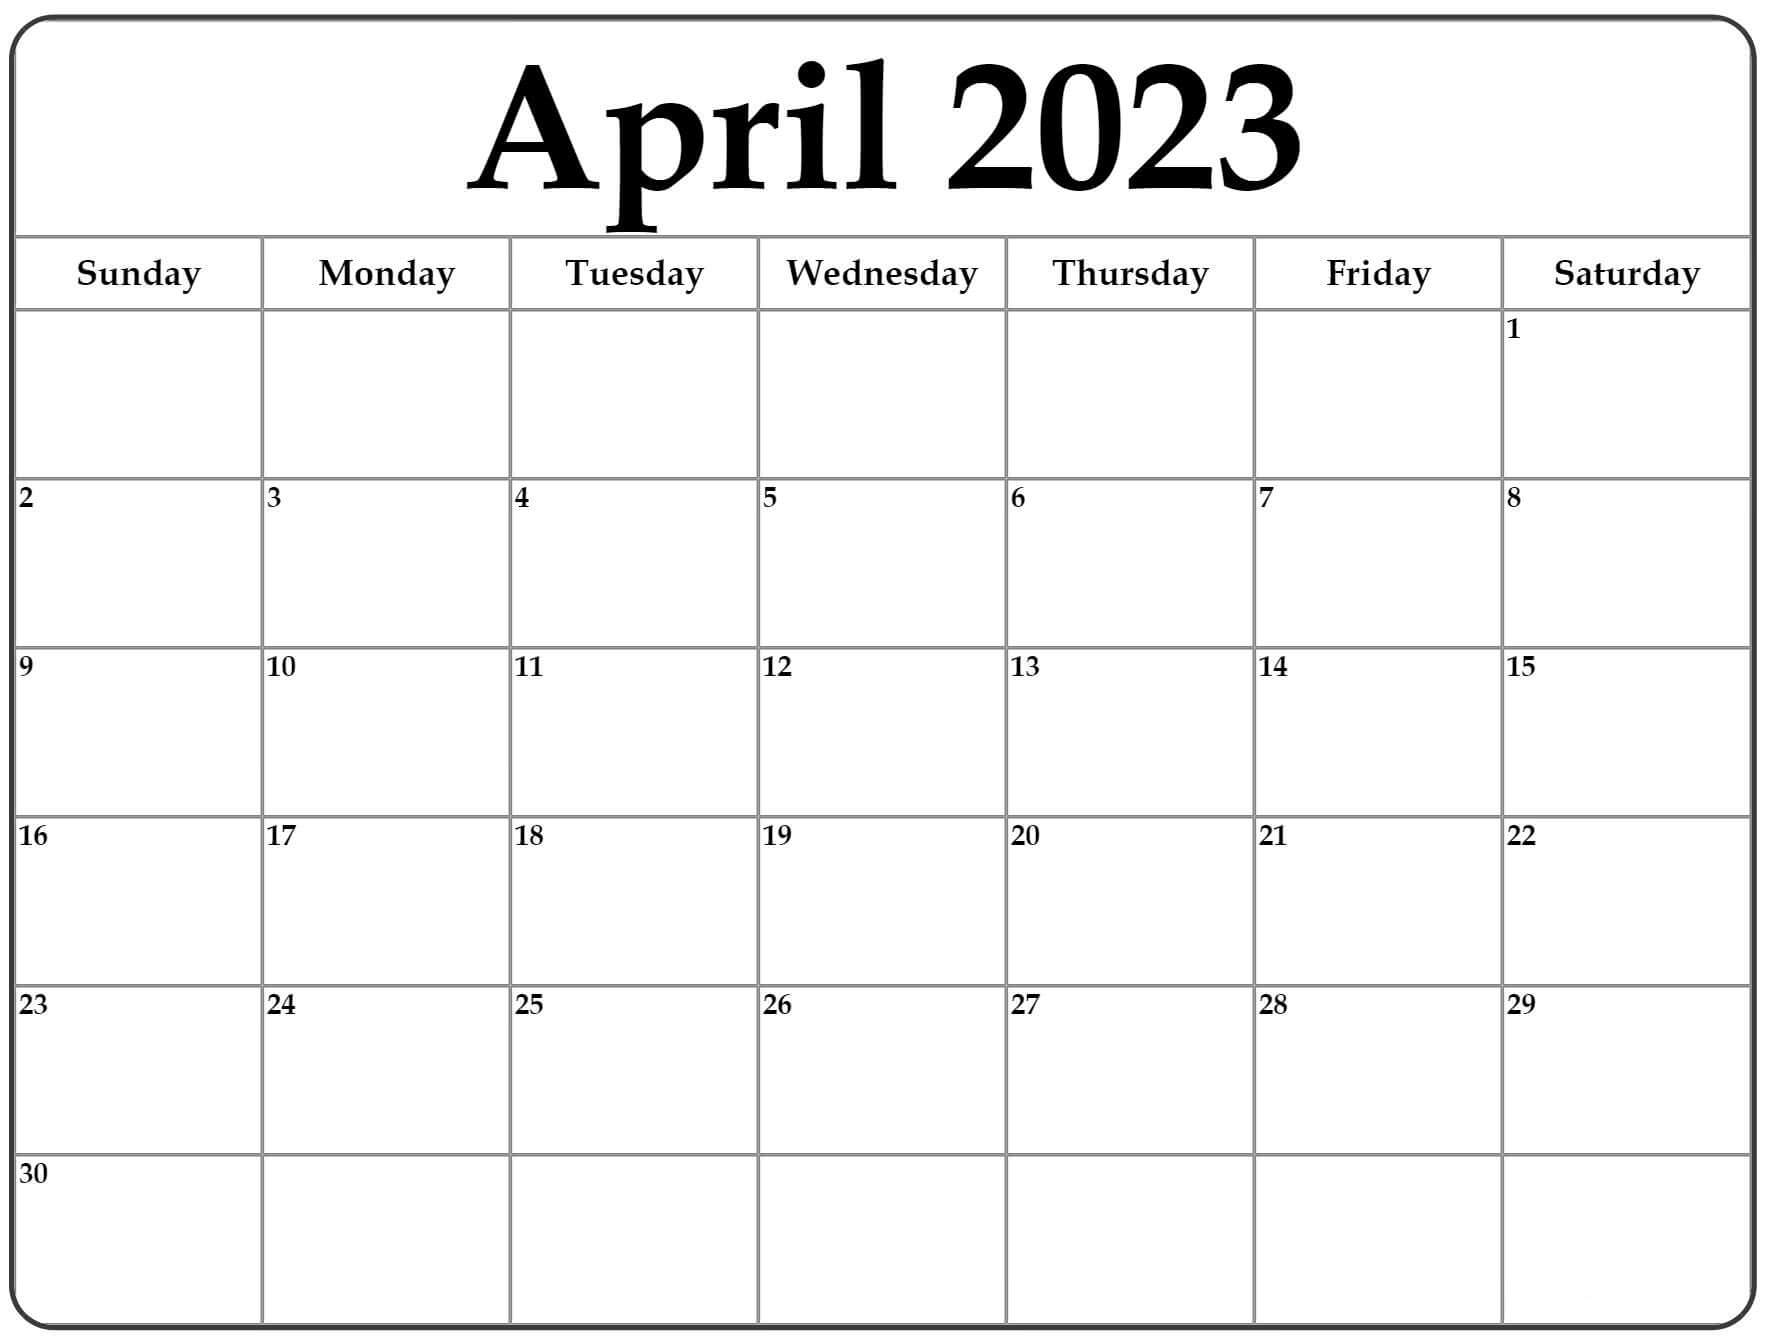 April 2023 Calendar Free Download